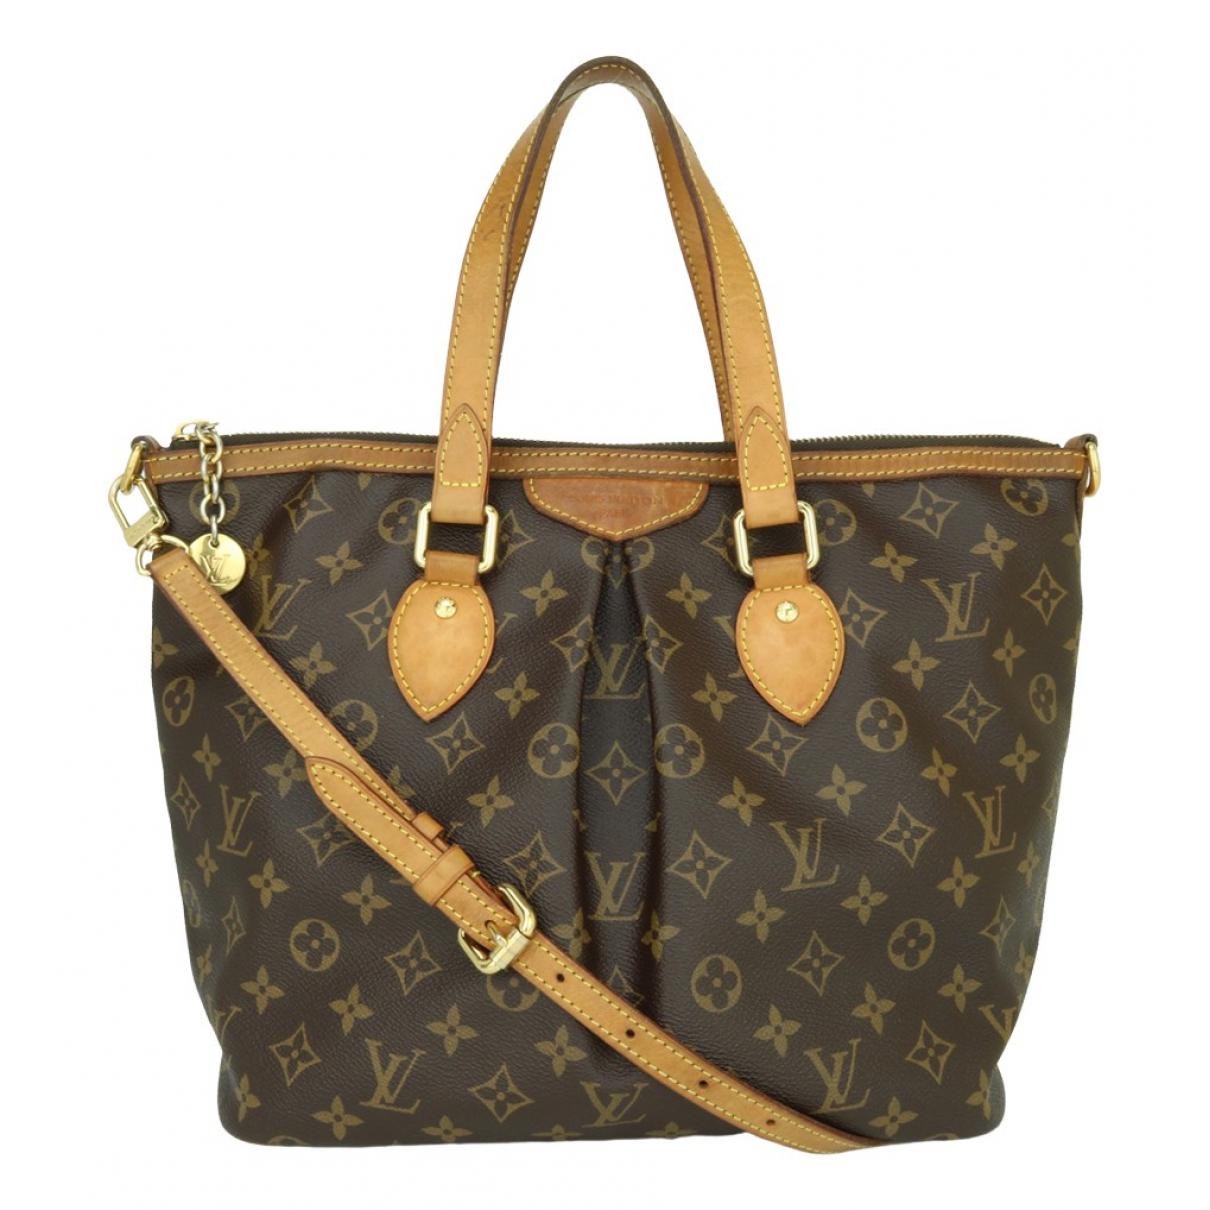 Palermo cloth handbag Louis Vuitton